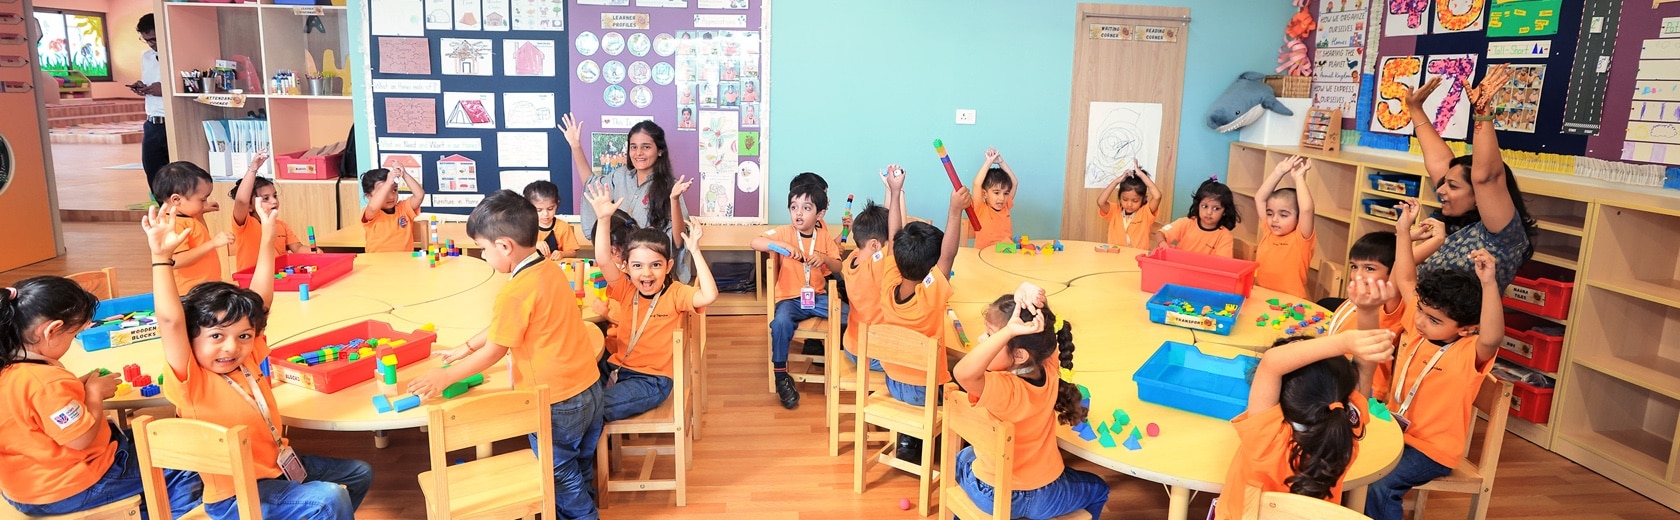 students in a art room at Adani International School